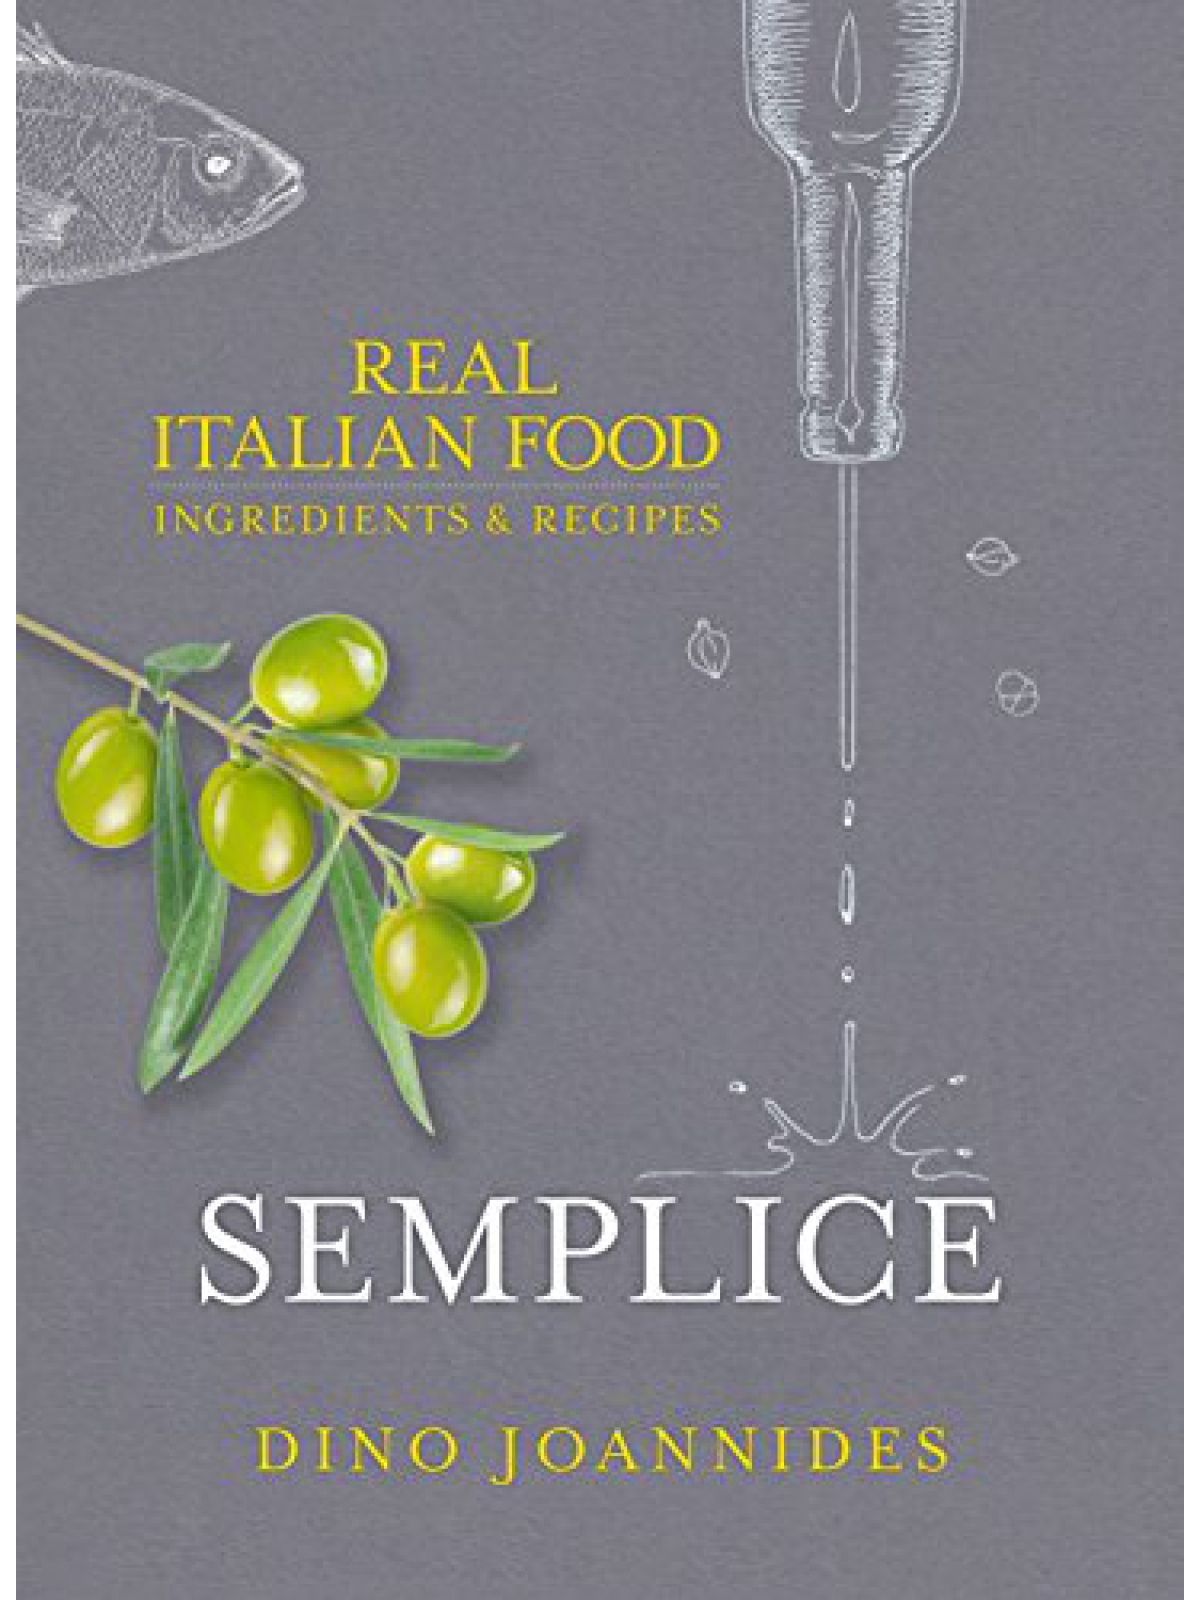 SEMPLICE- REAL ITALIAN FOOD  Купить Книгу на Английском